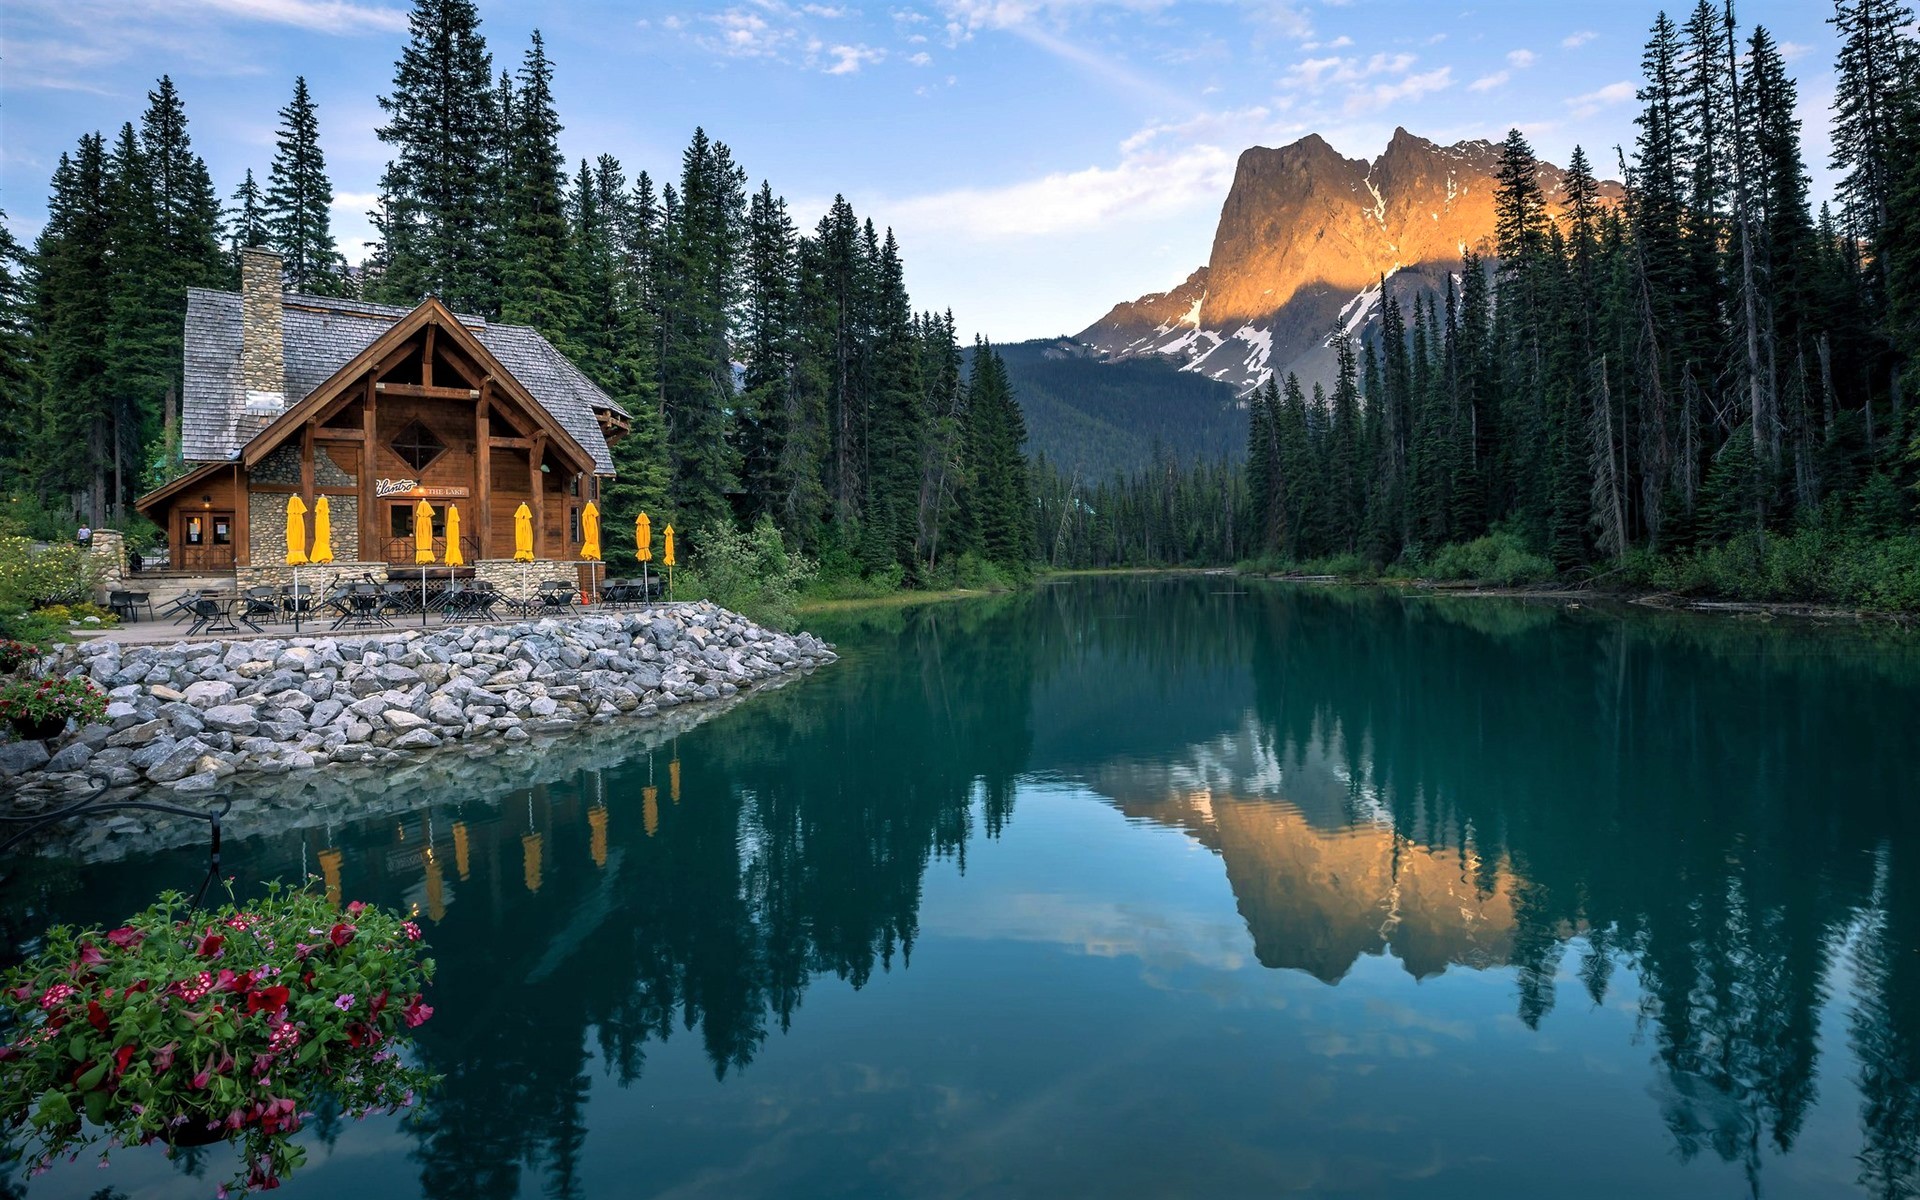 man made, cabin, lake, mountain, restaurant, tree, wooden